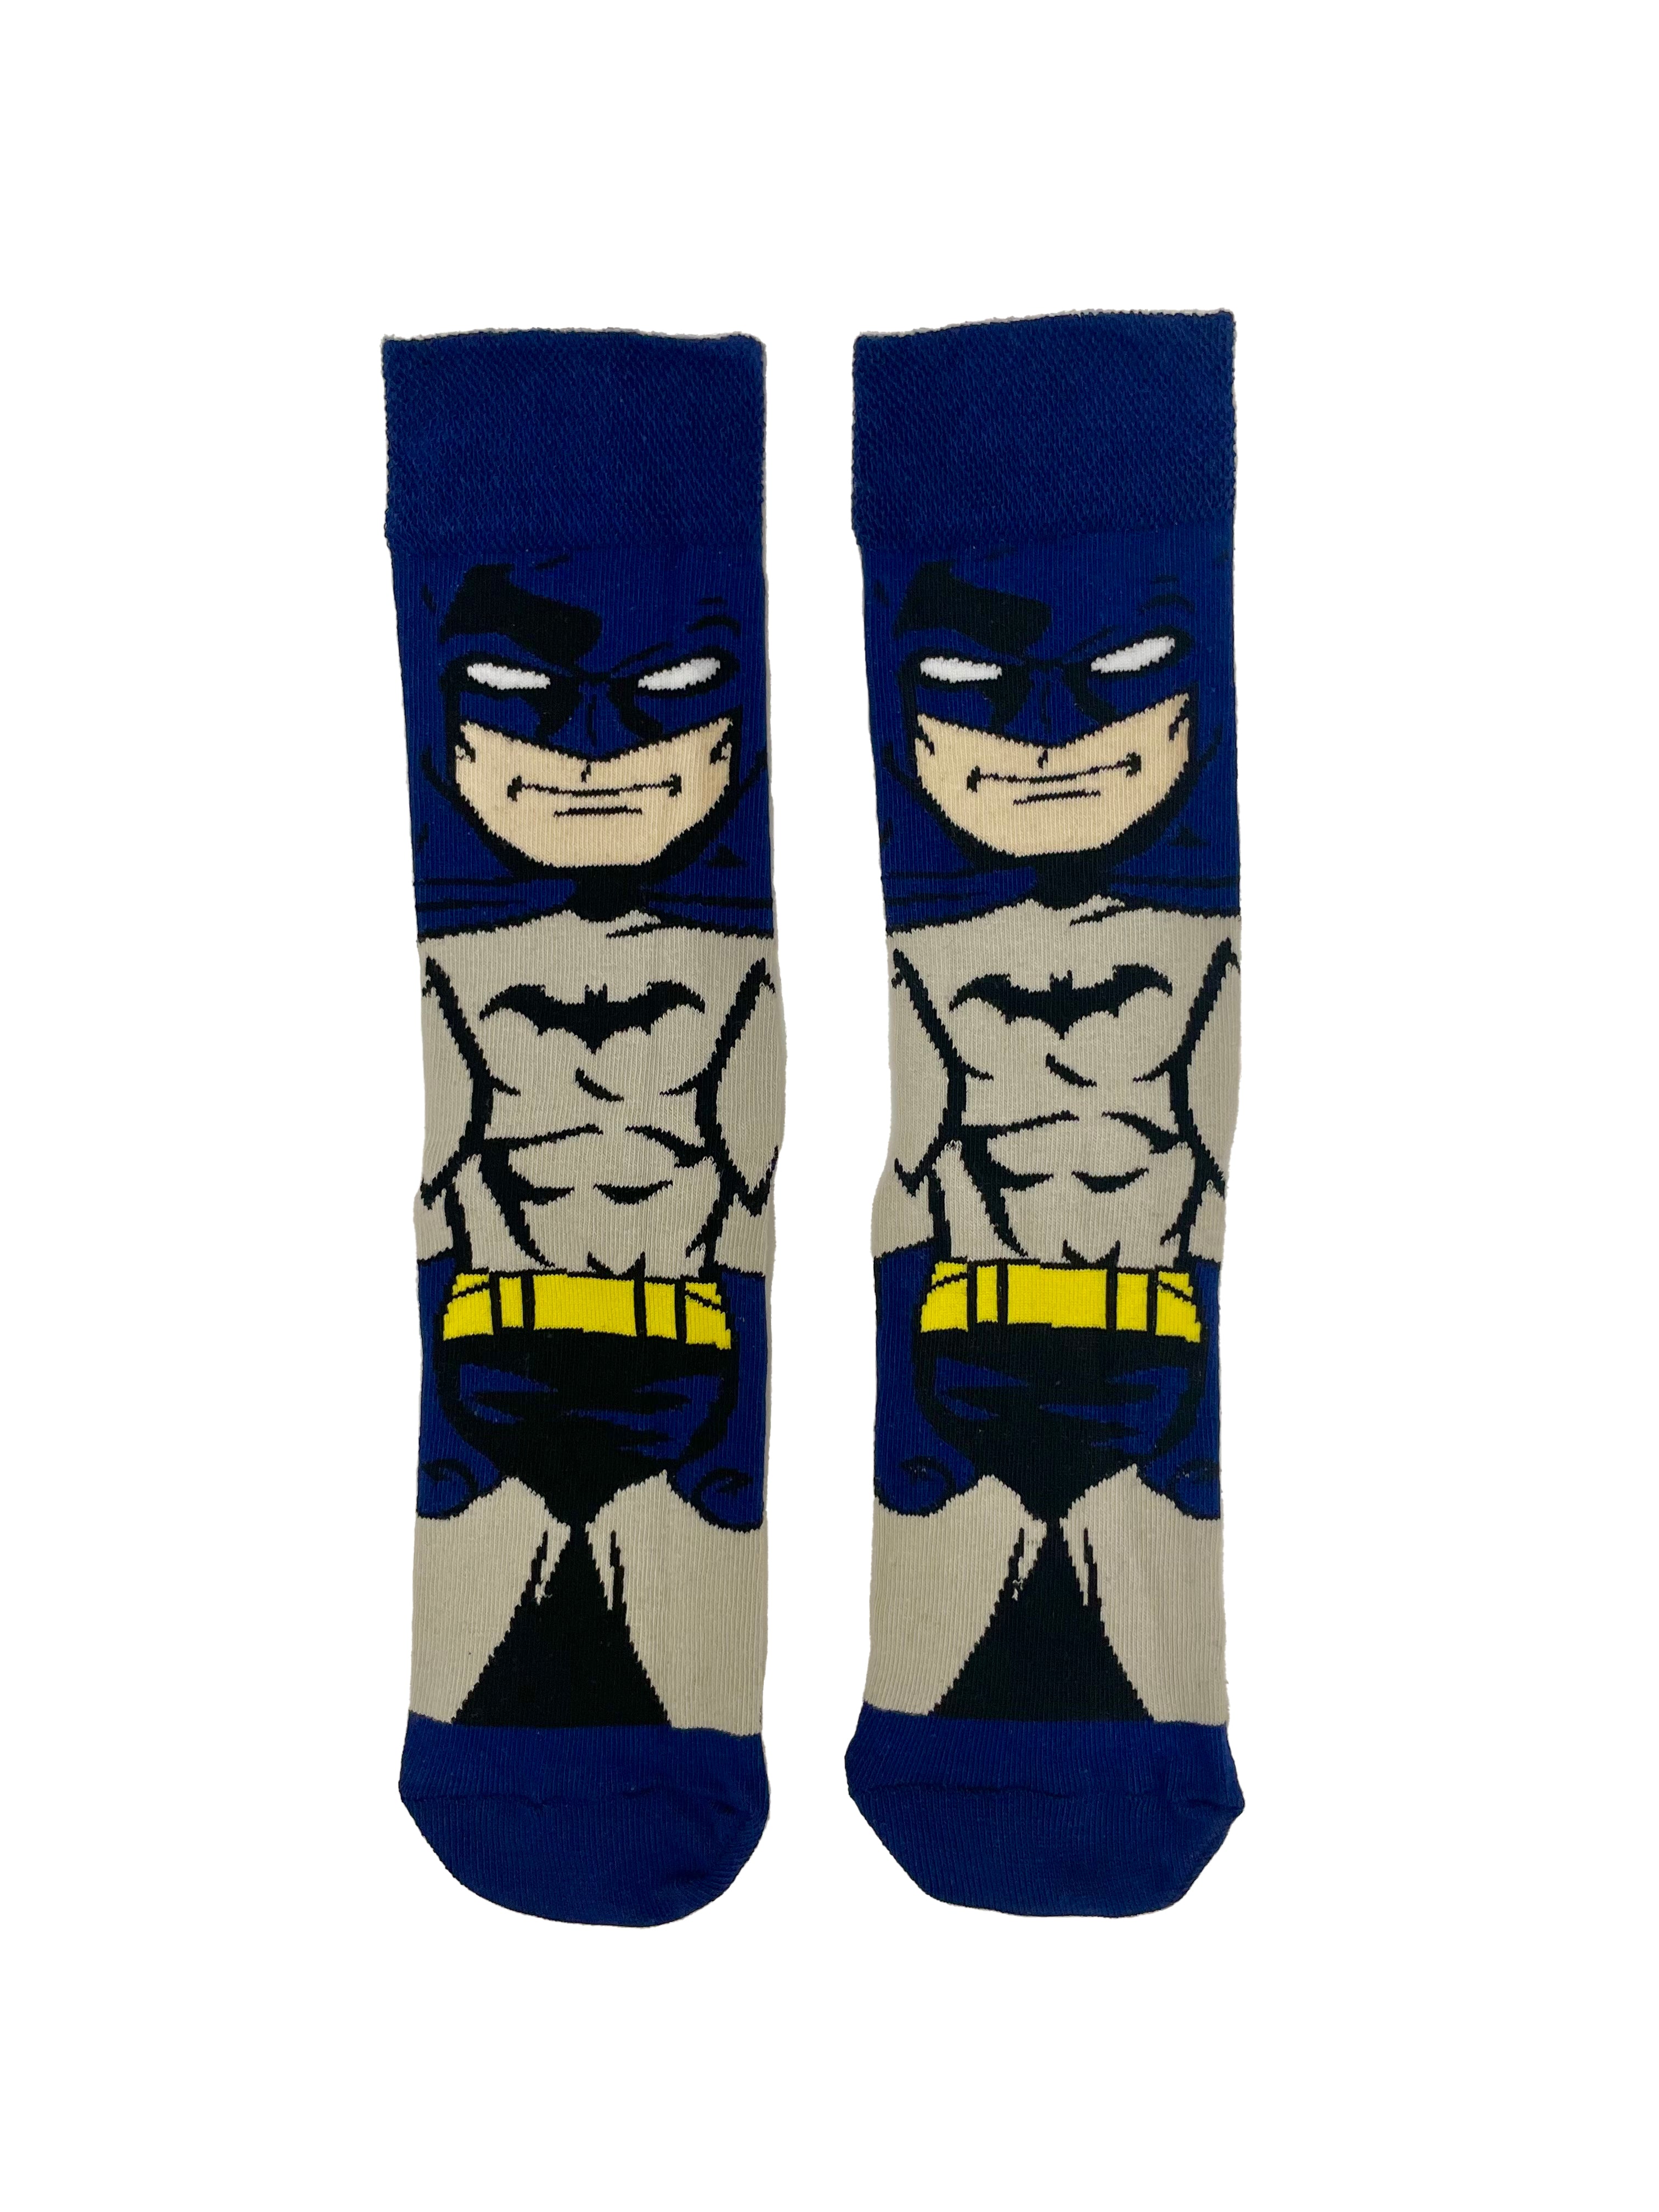 The Batman Socks – SickSock